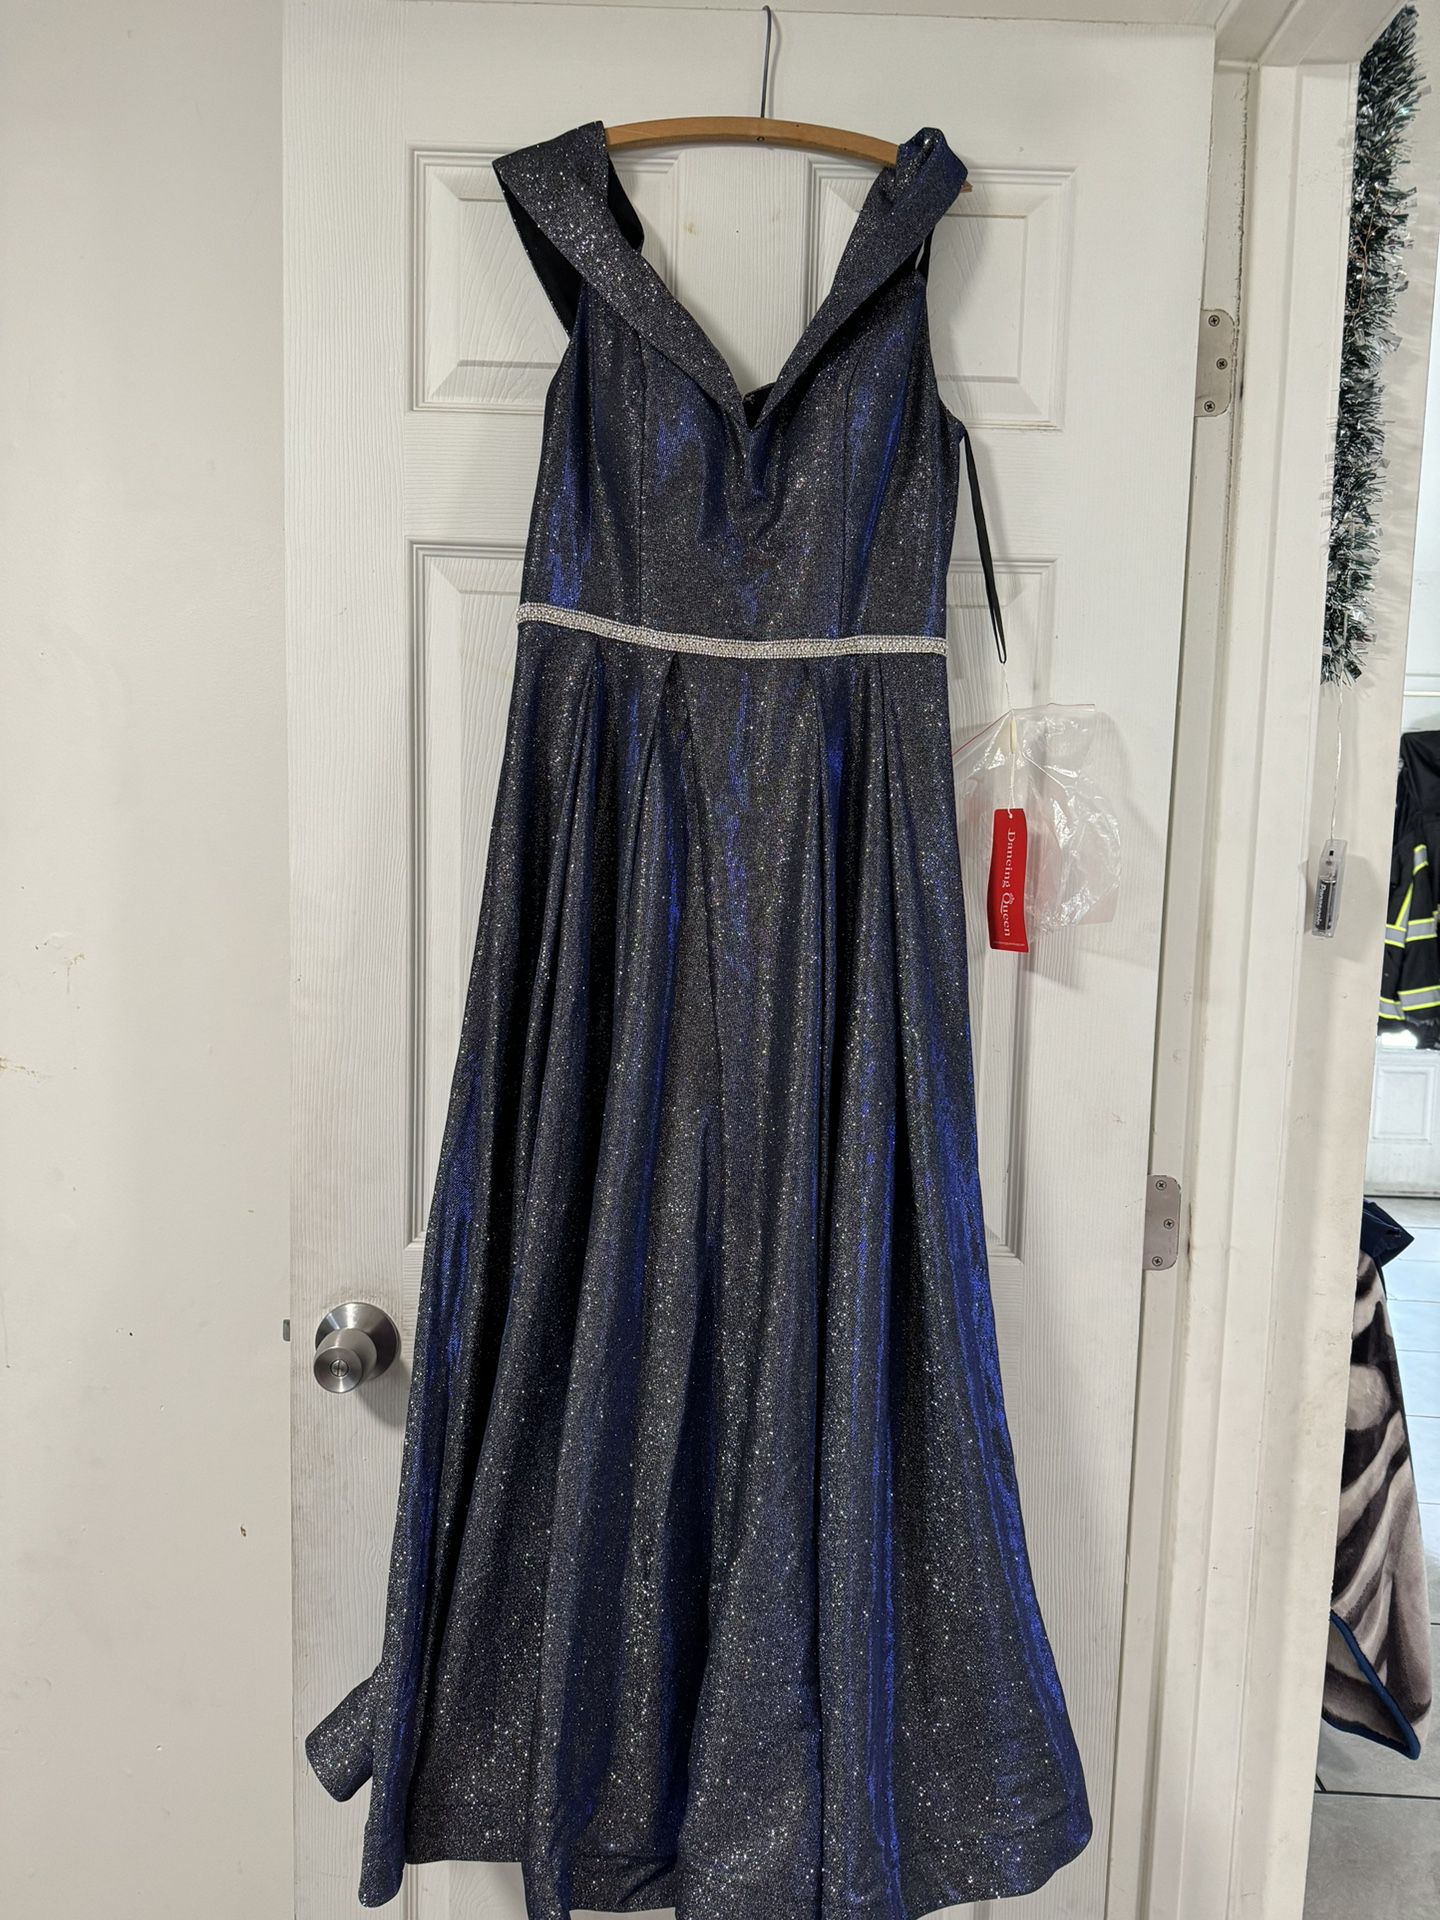 Sparkly Blue Dress 💙